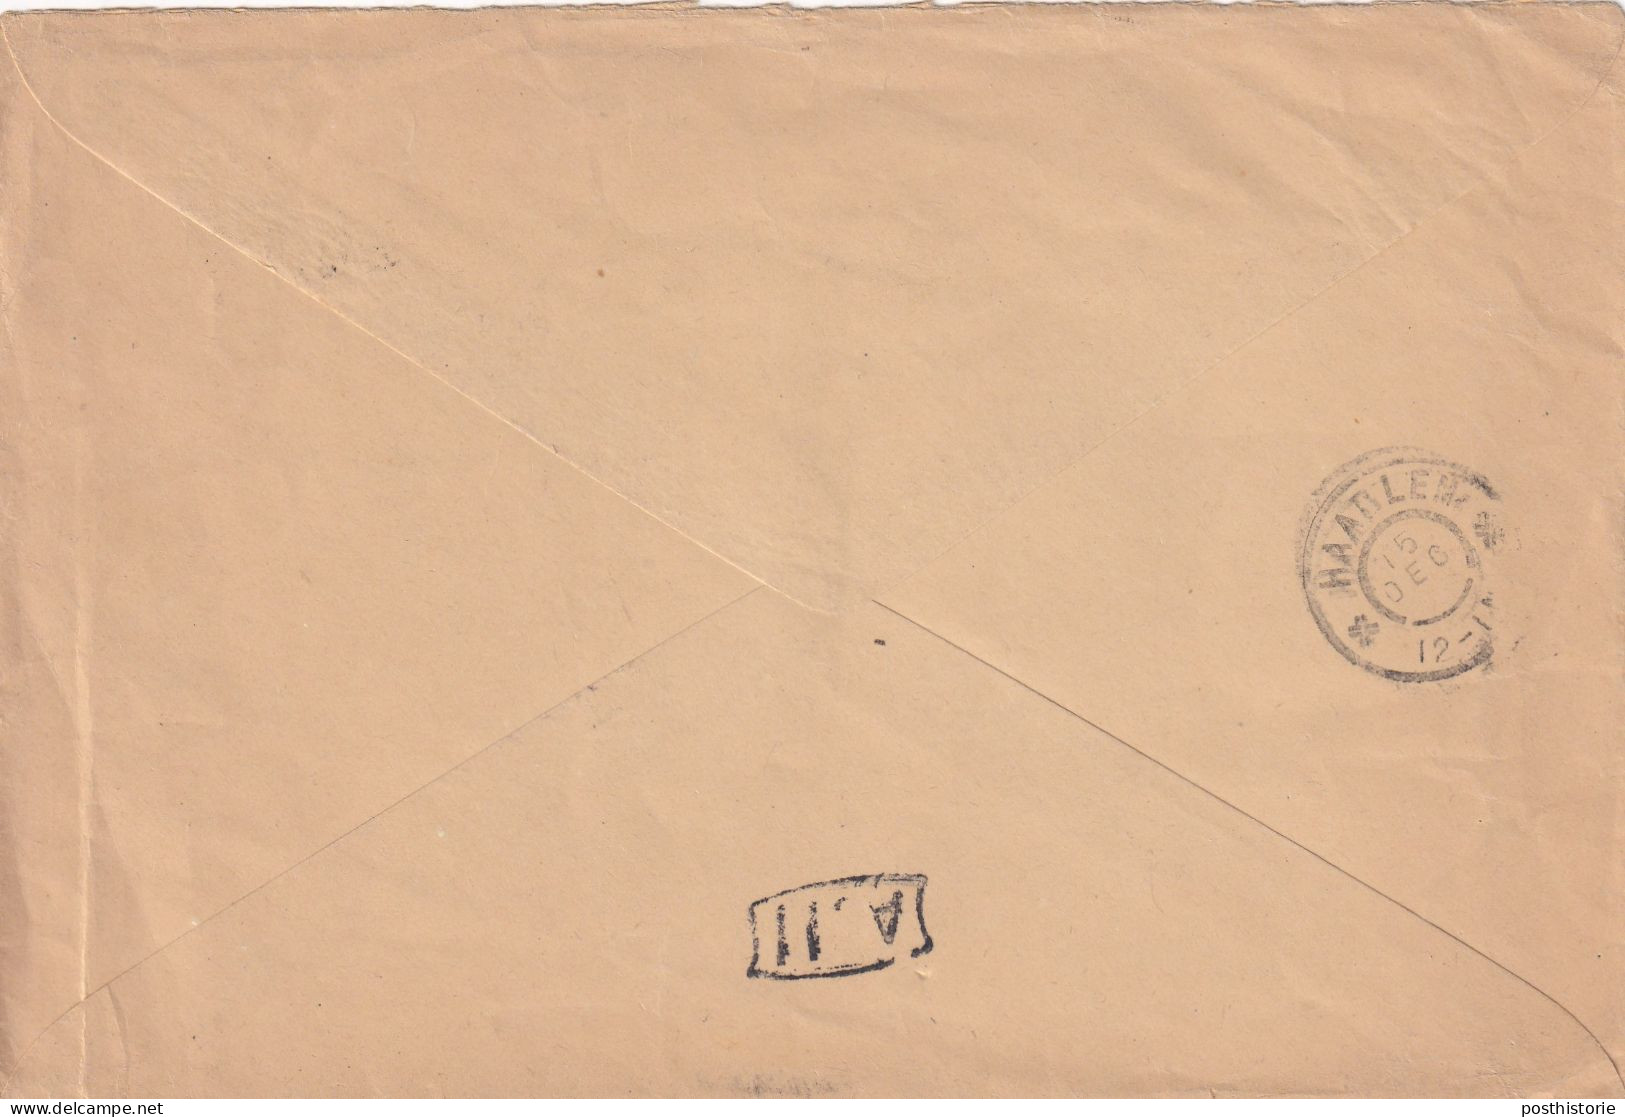 Envelop 15 Dec 1907 Arnhem Oldenzaal B (spoor Grootrond) Naar Haarlem (grootrond Zonder Jaartal) - Postal History